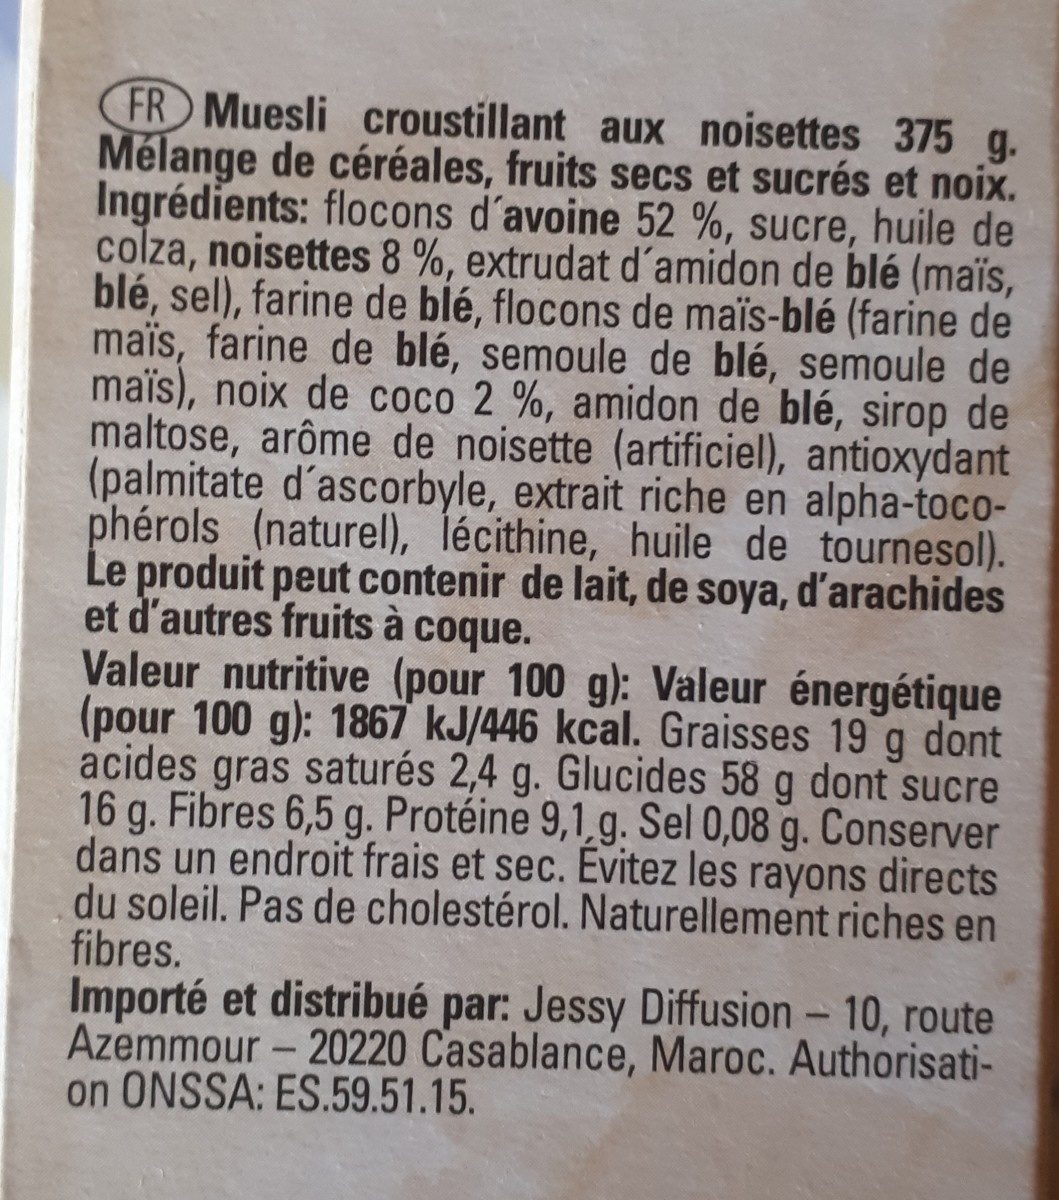 Crunchy Muesli With Nuts & Raisins - Ingredients - fr